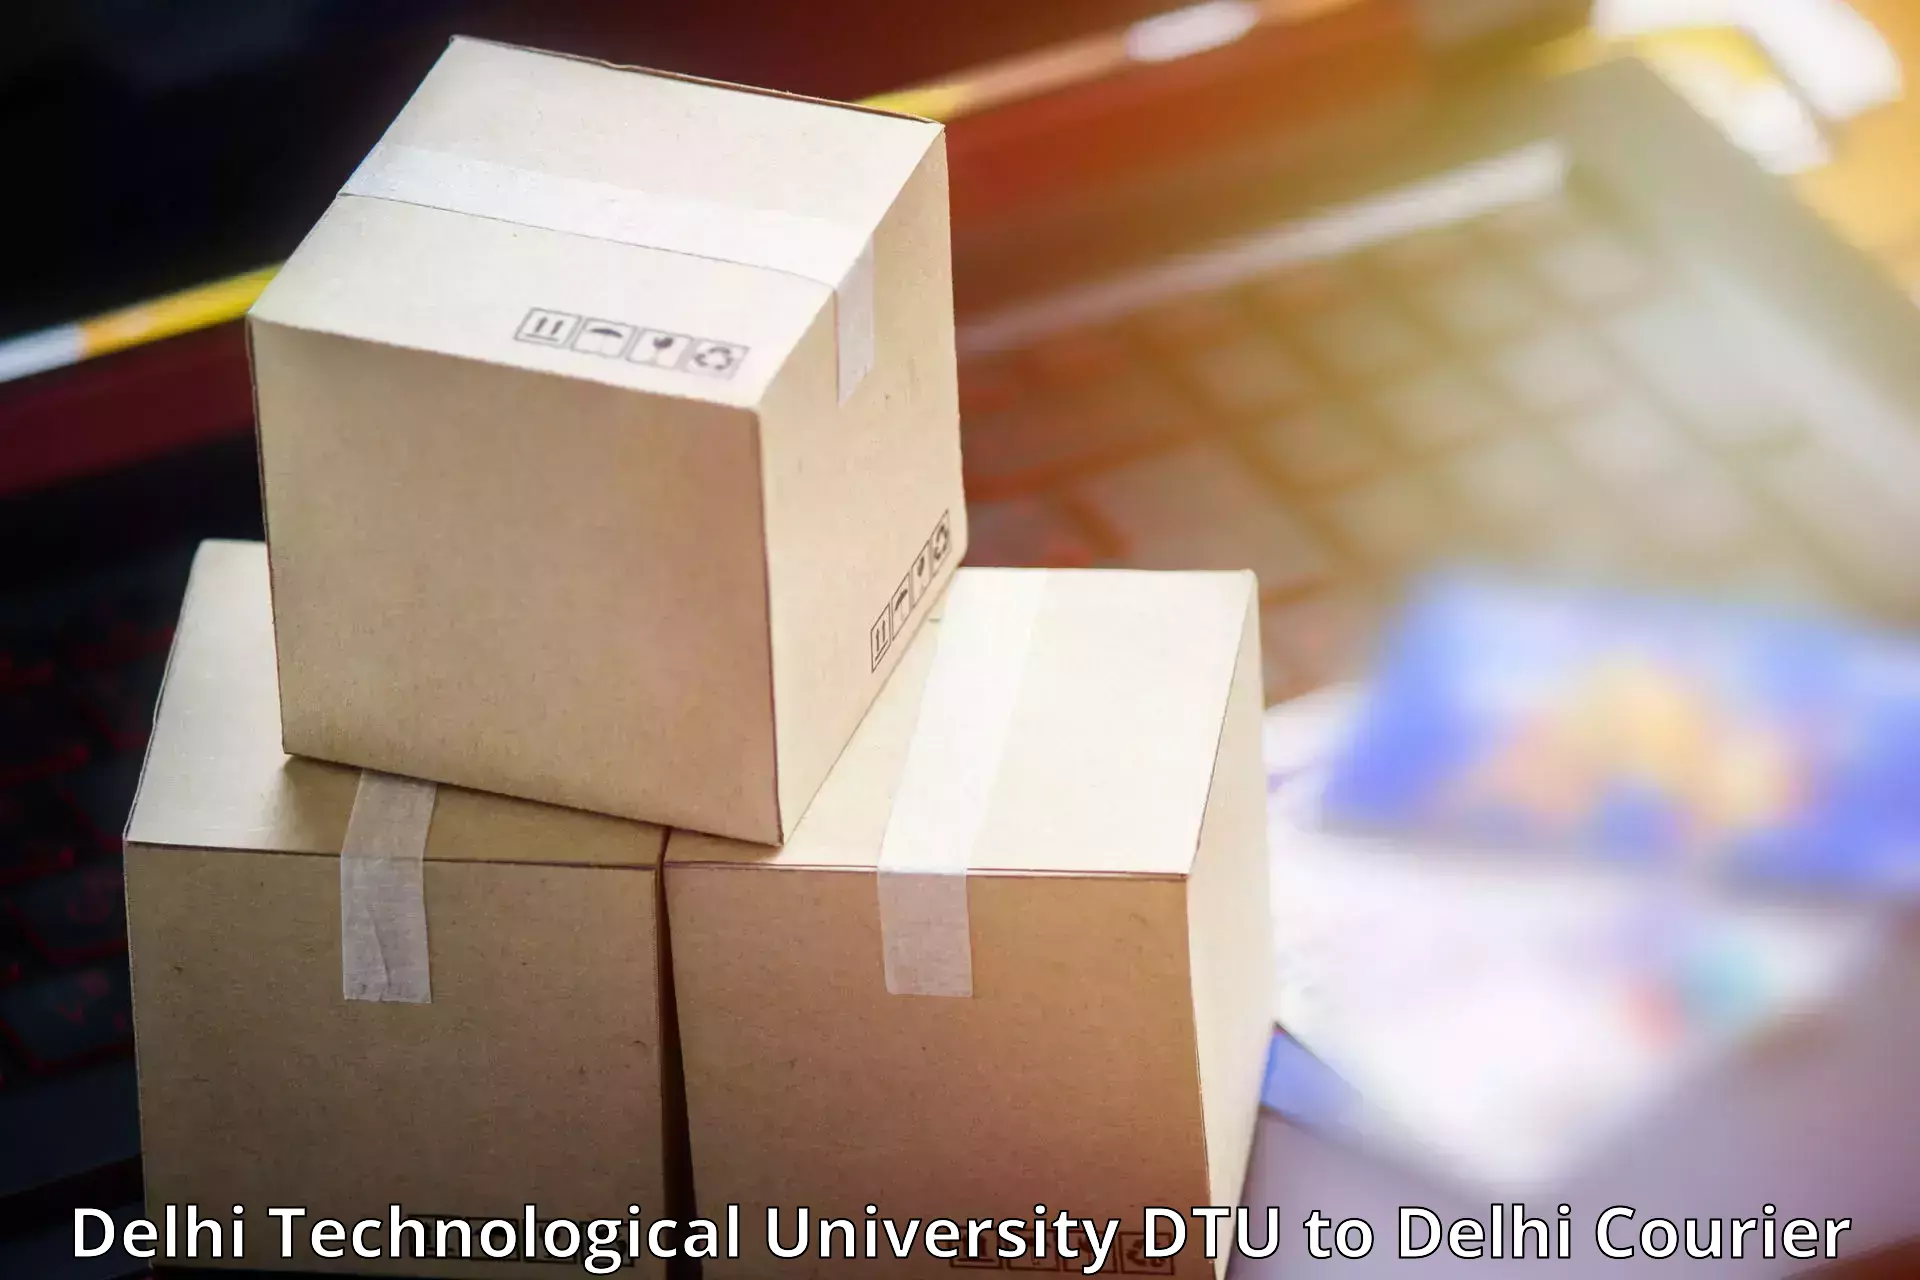 Speedy delivery service Delhi Technological University DTU to University of Delhi